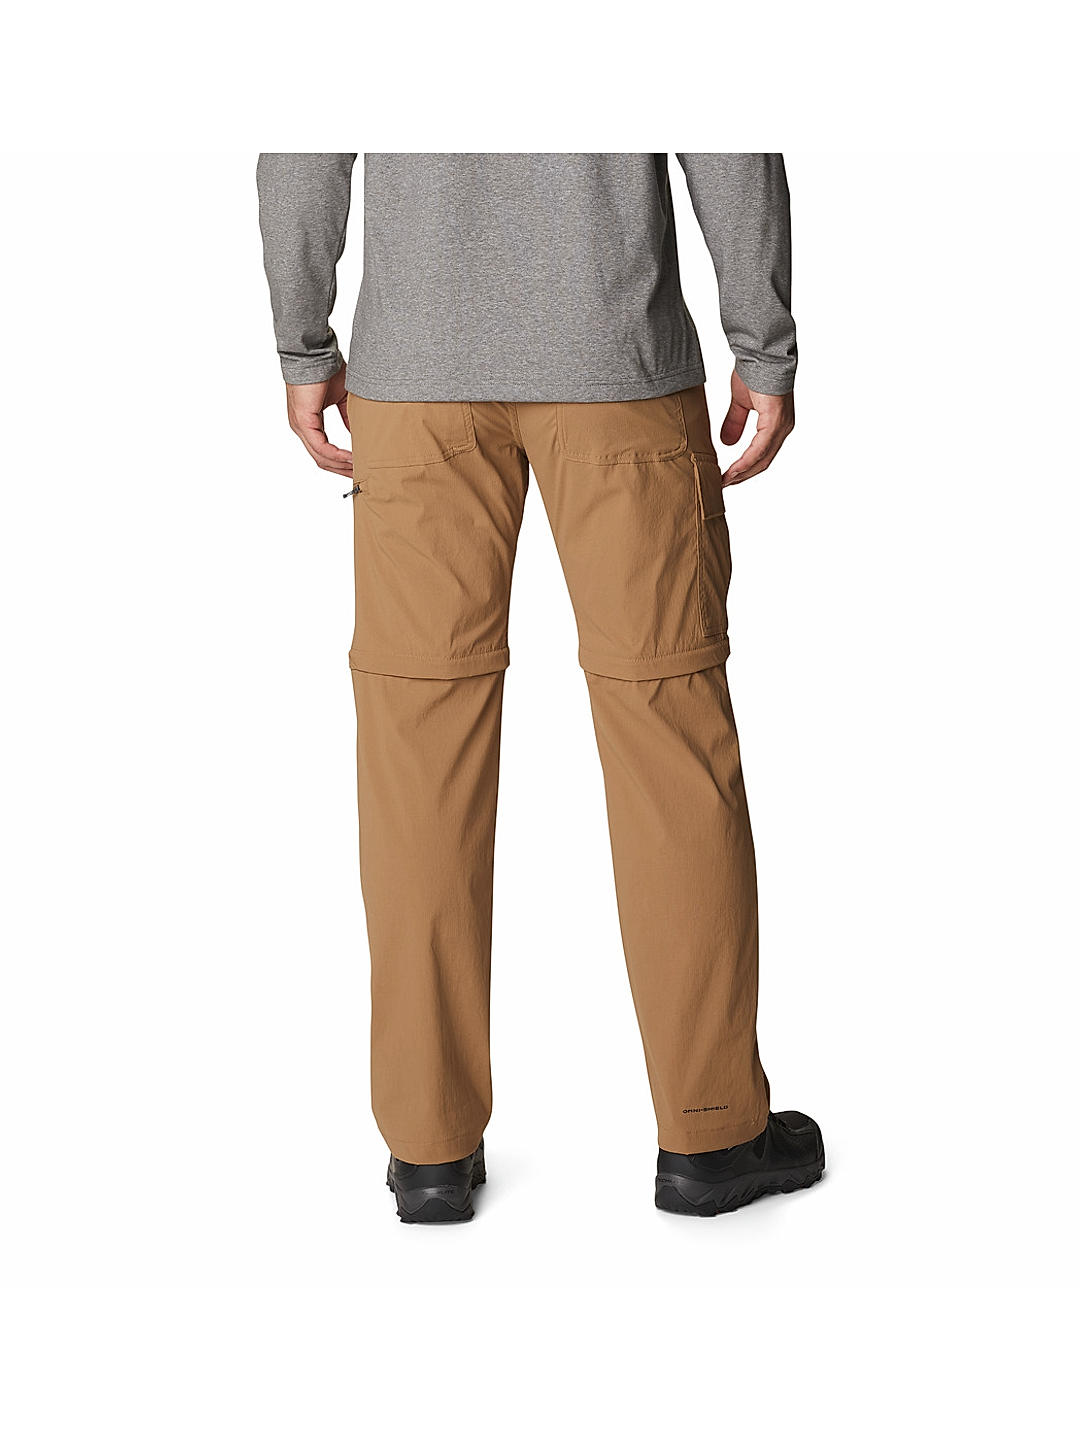 Men's Zip Off Pants | Convertible Pants | Mountain Warehouse US